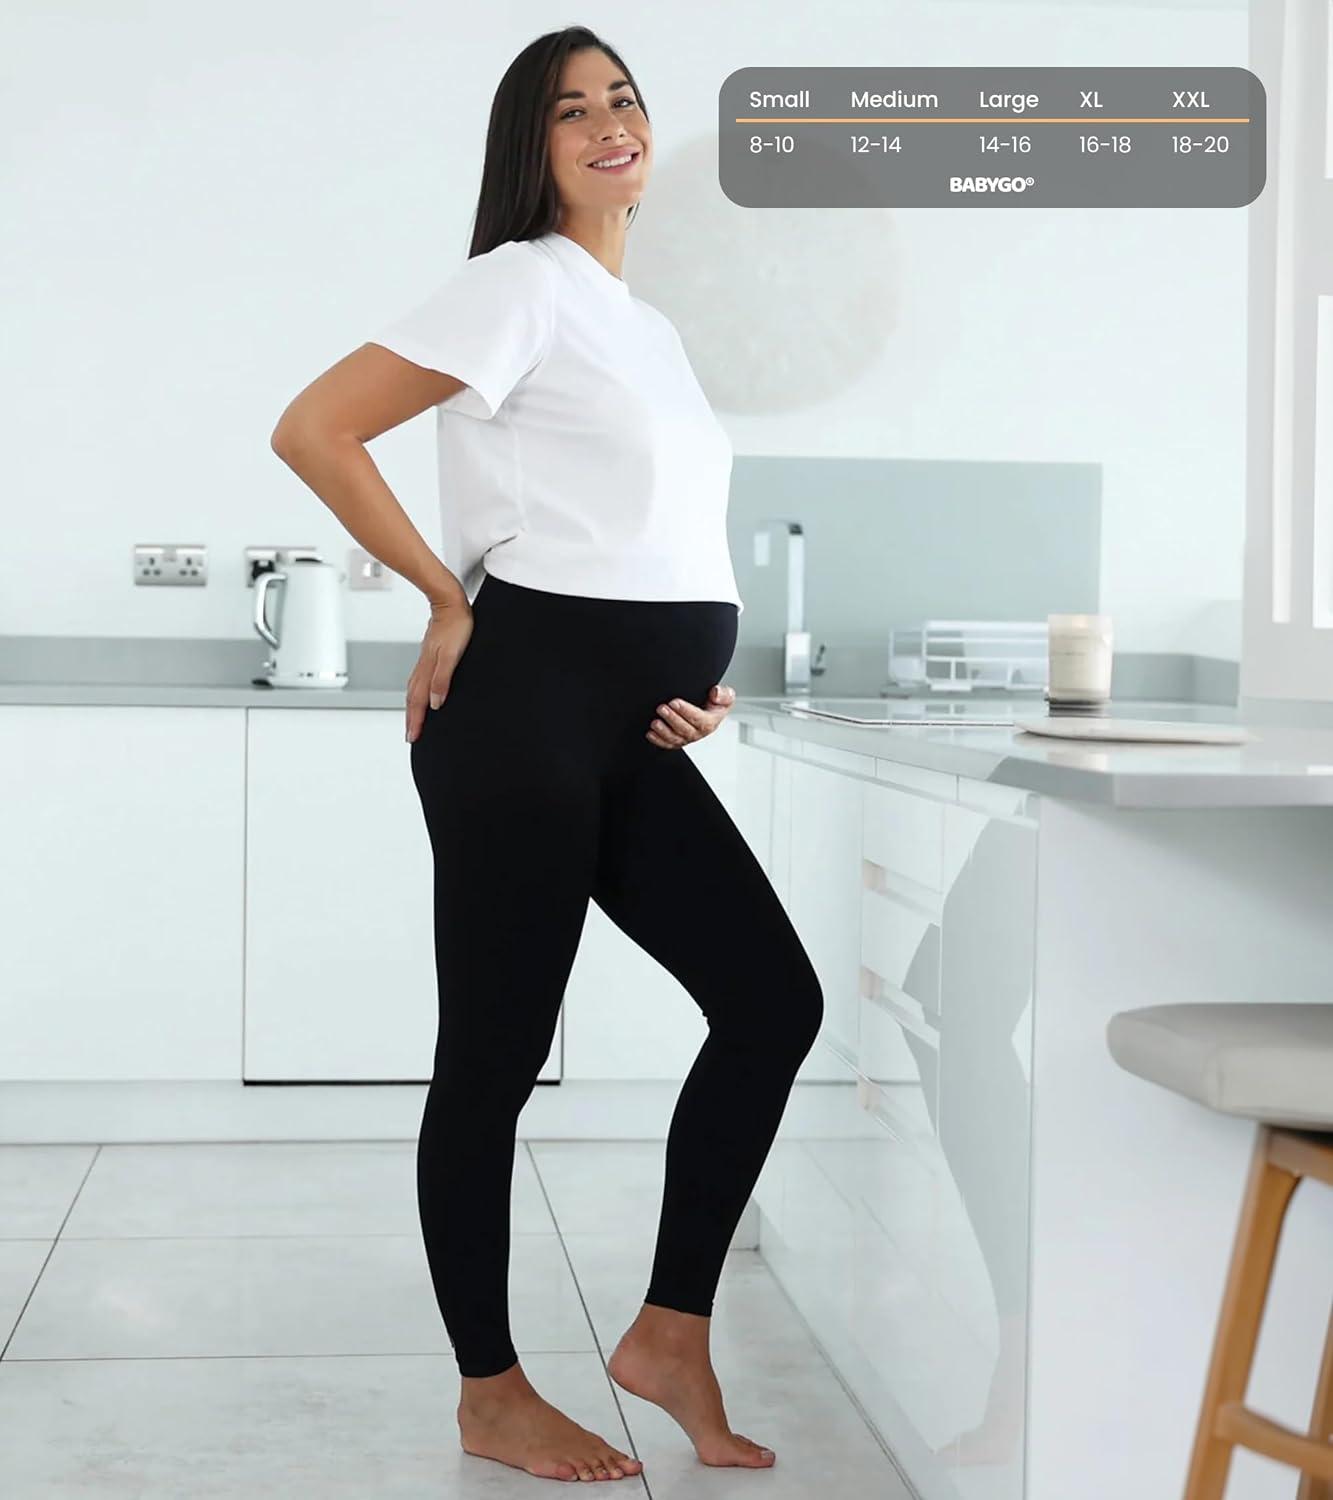 BABYGO Maternity Leggings TriStretch for Pregnant Women